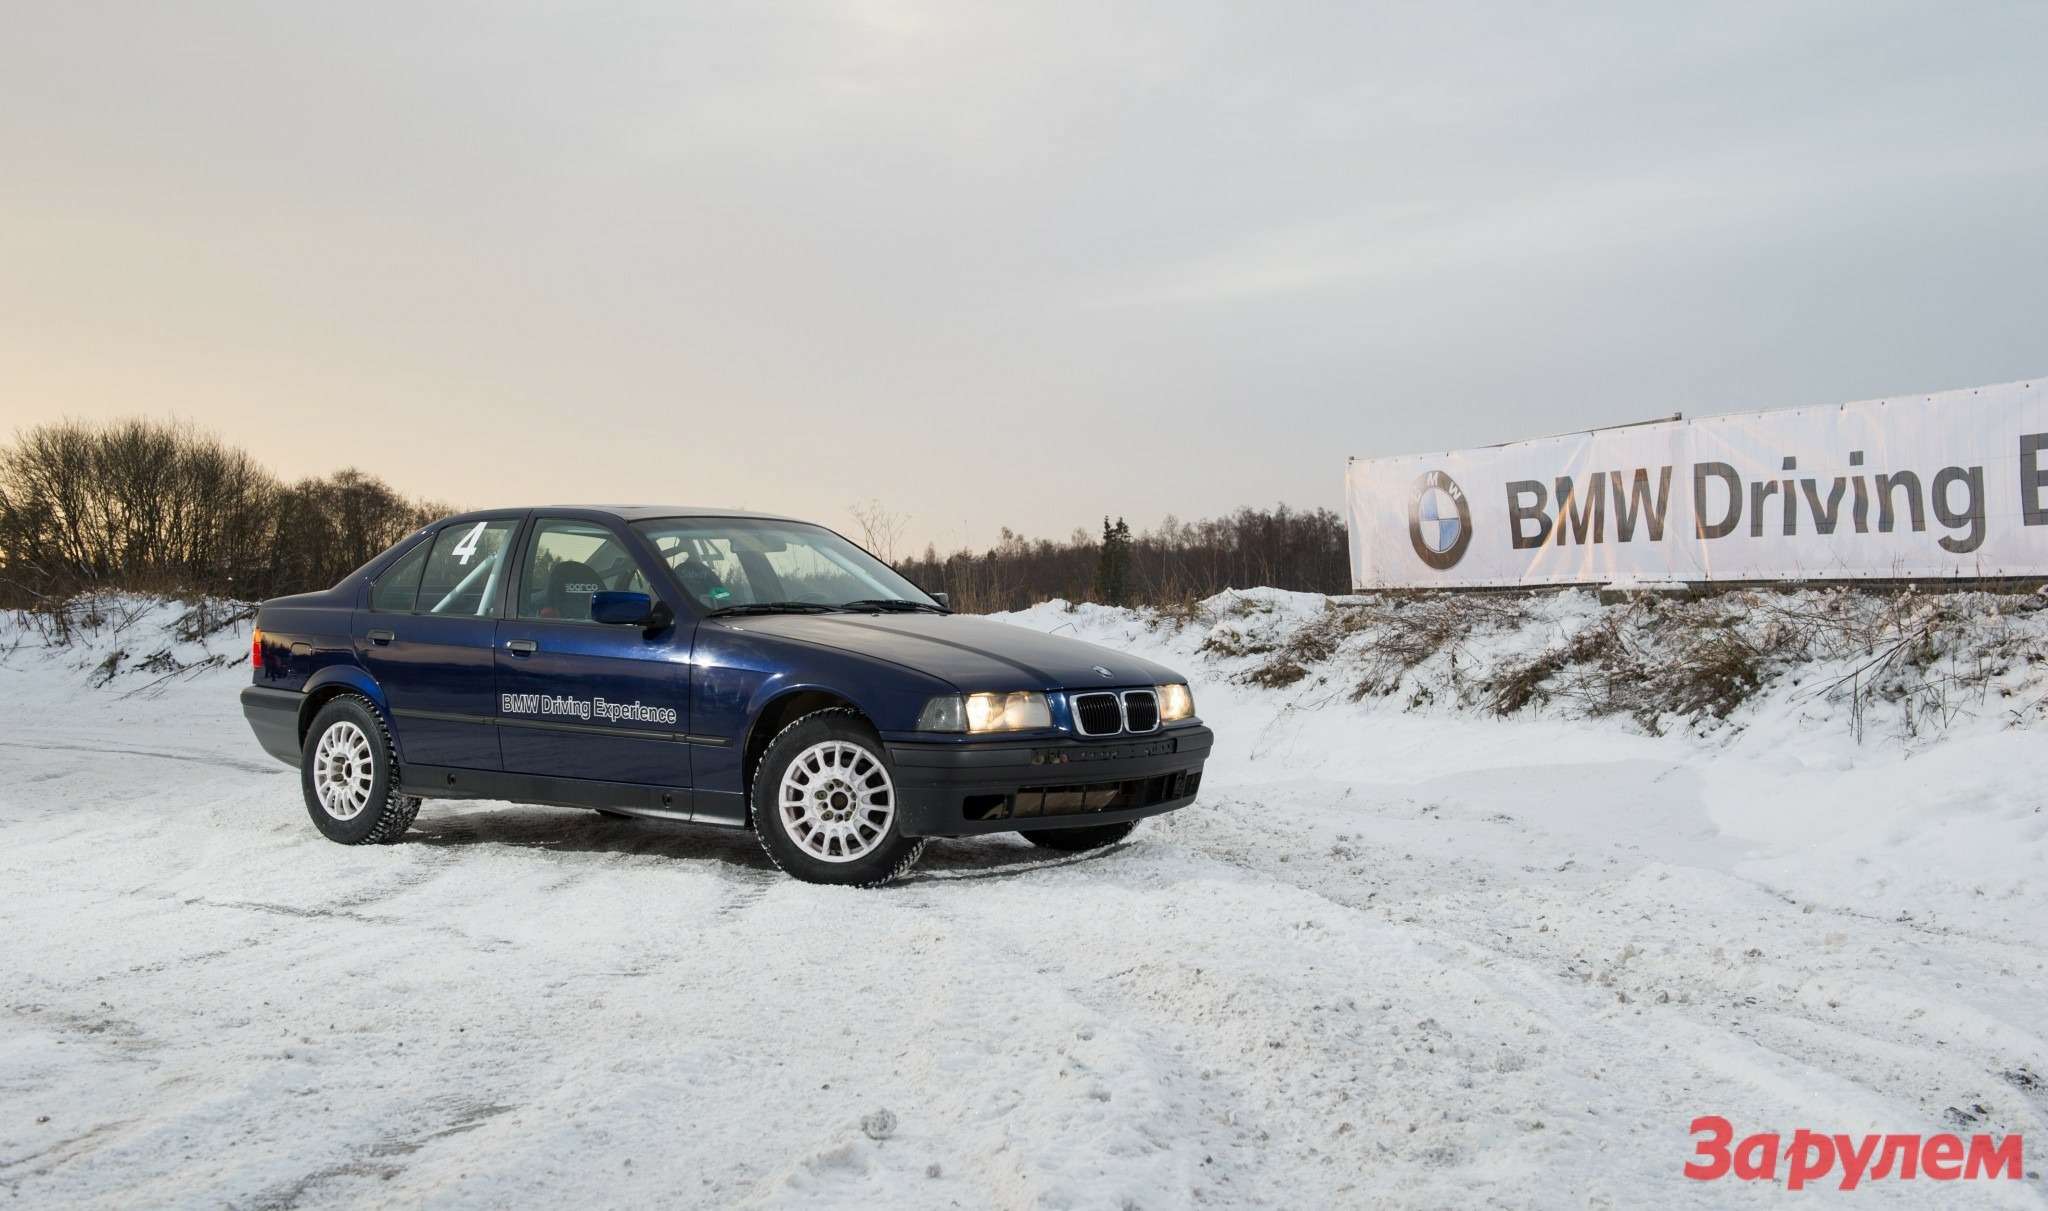 BMW xDrive to Rally (101)